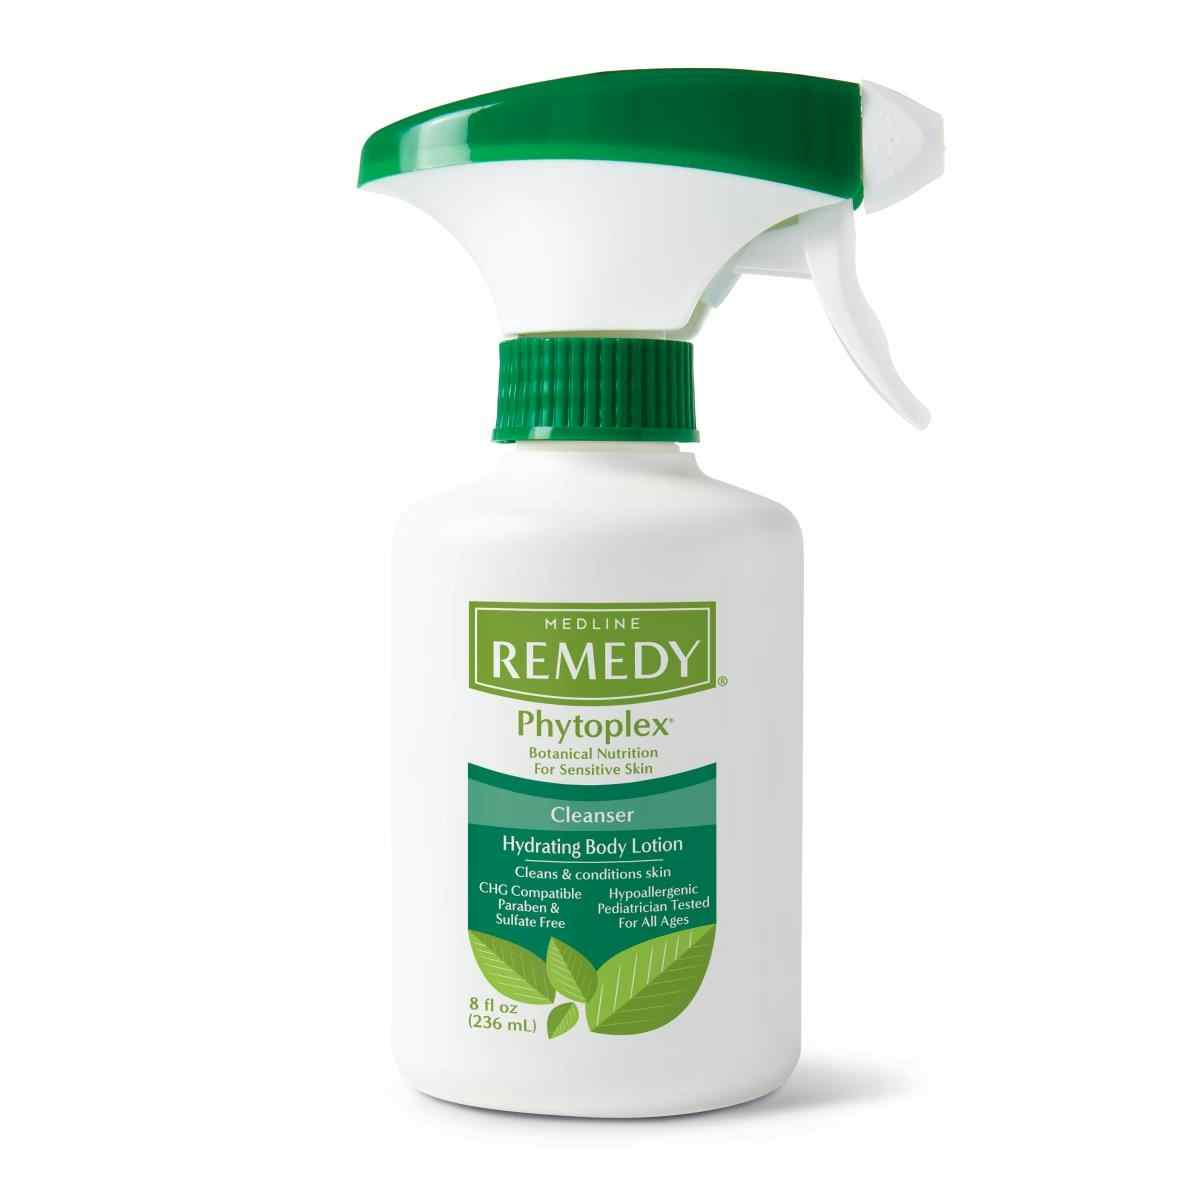 Medline Remedy Phytoplex Cleansing Body Lotion, Trigger Bottle, 8 oz., MSC092308, Case of 12